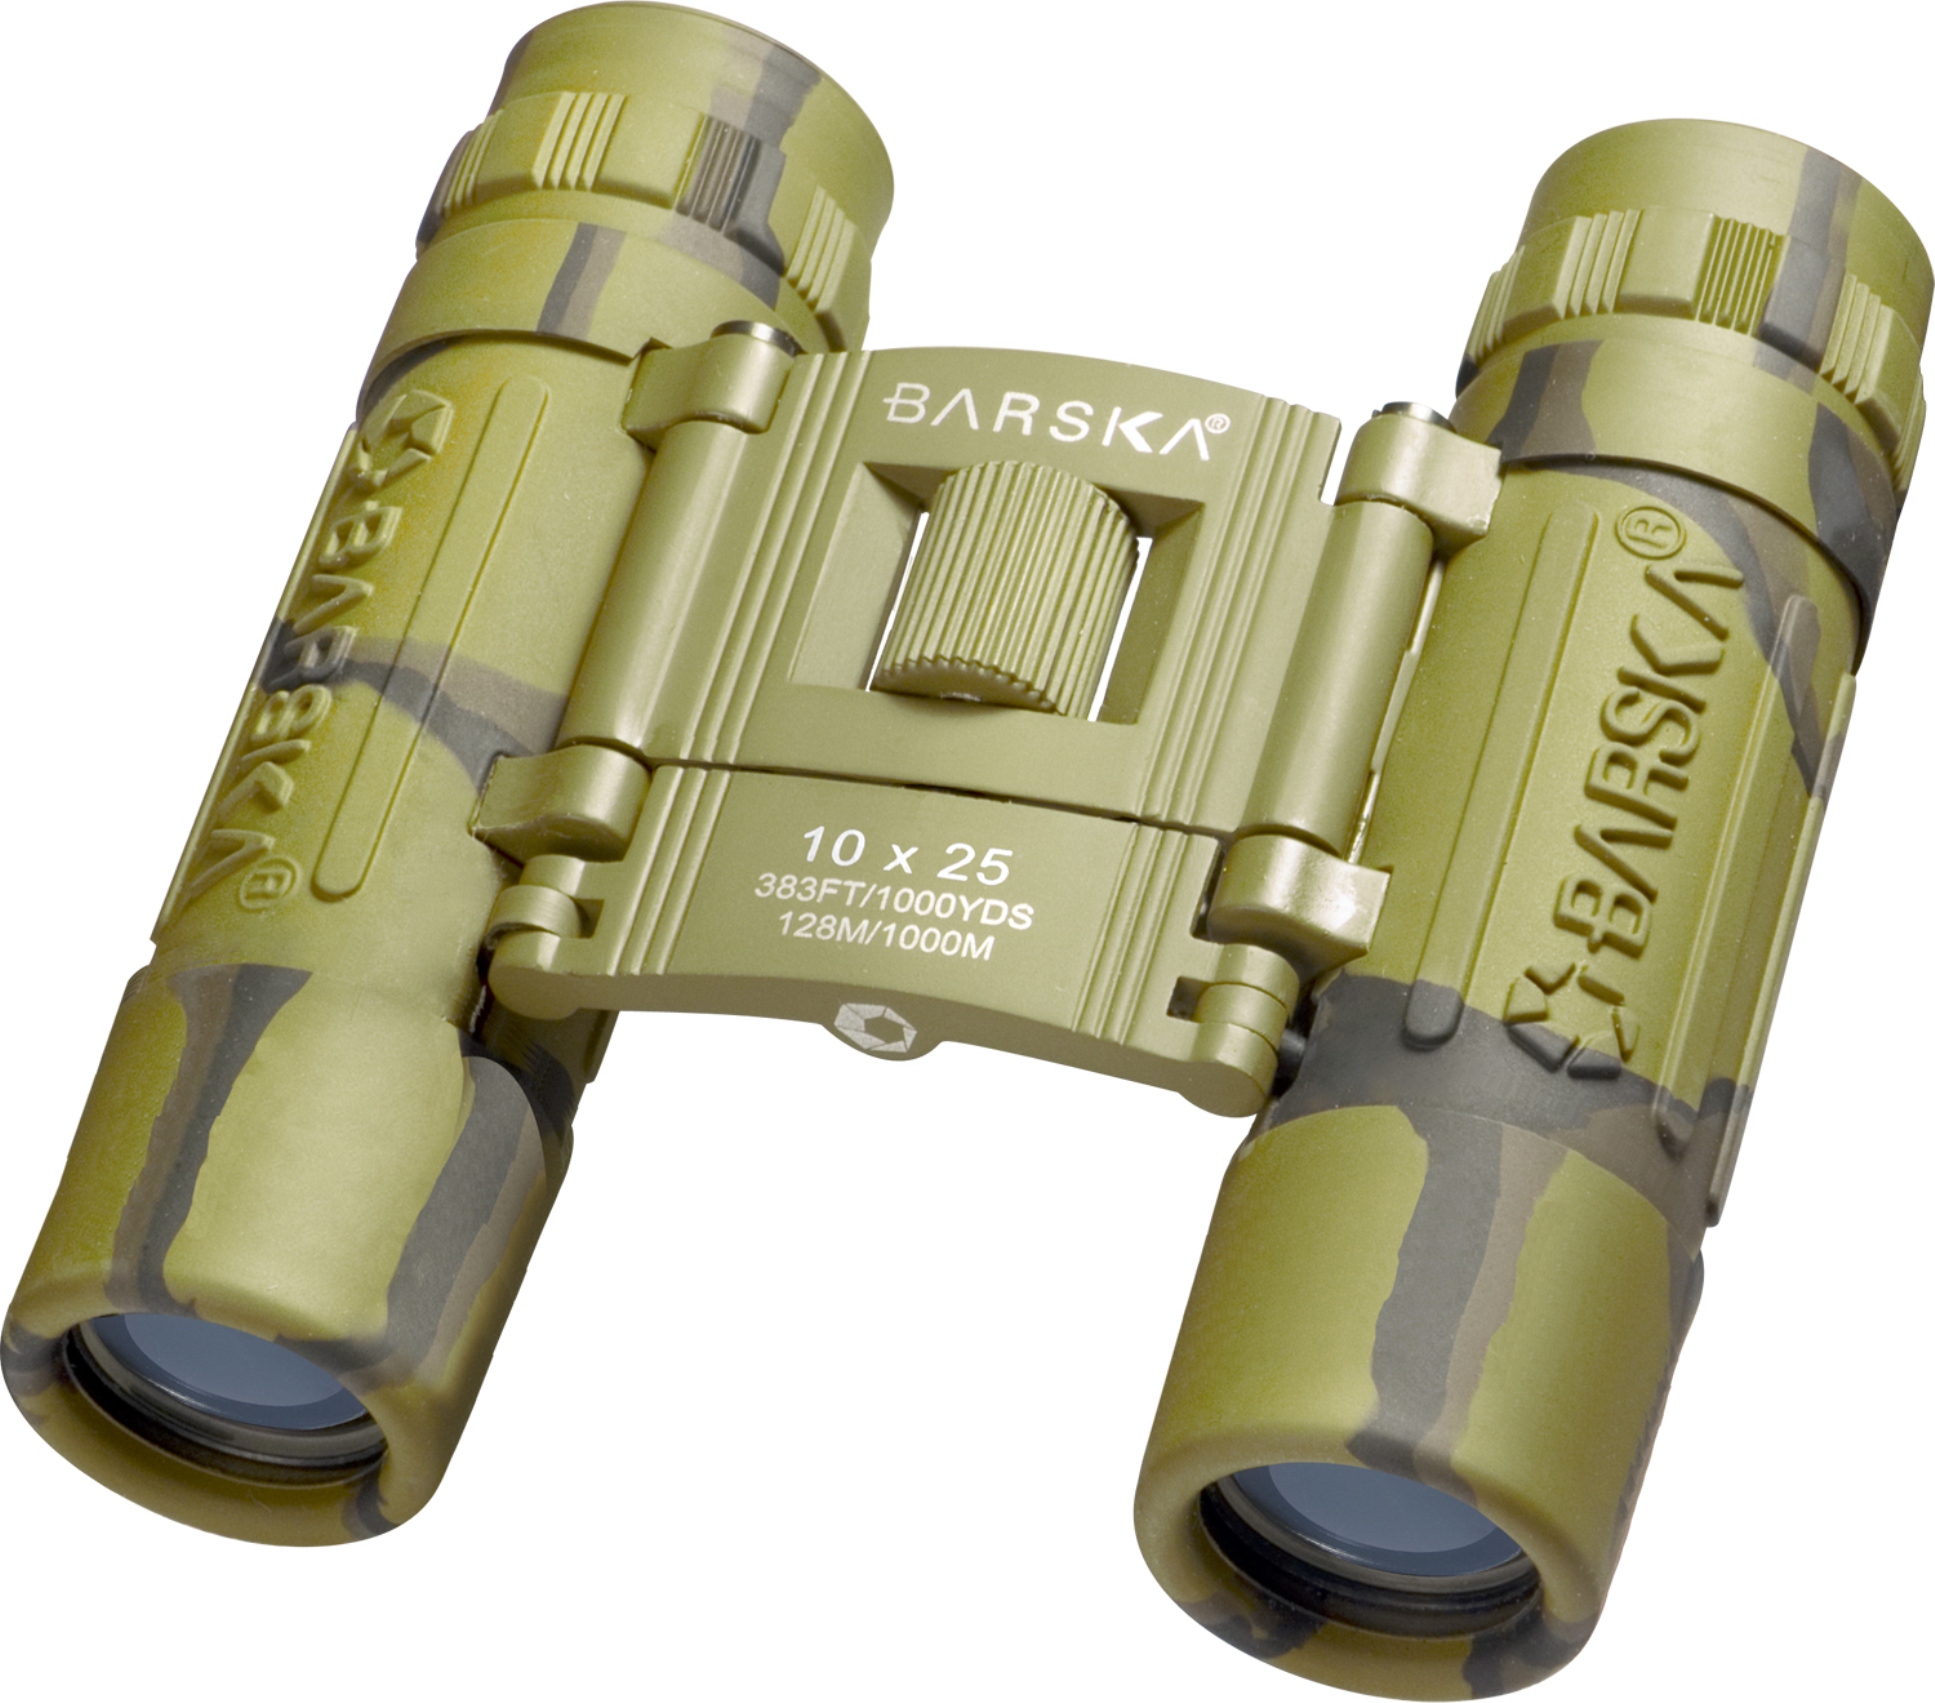 10x25 Lucid View Camo Binoculars by Barska